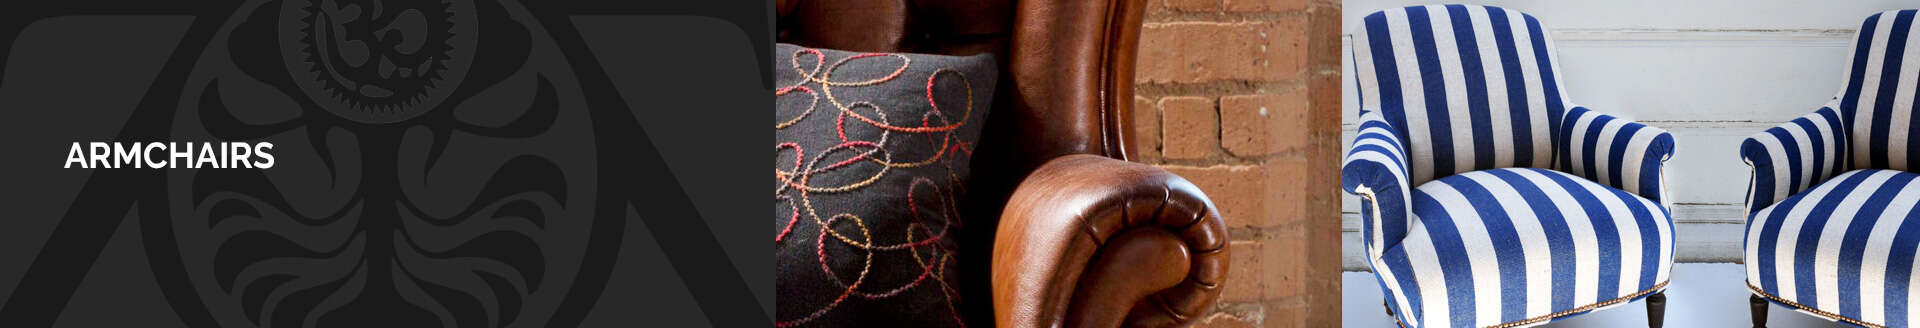 armchairs catalogue manufacturers indonesia exporters wholesalers suppliers bali java jepara zenddu